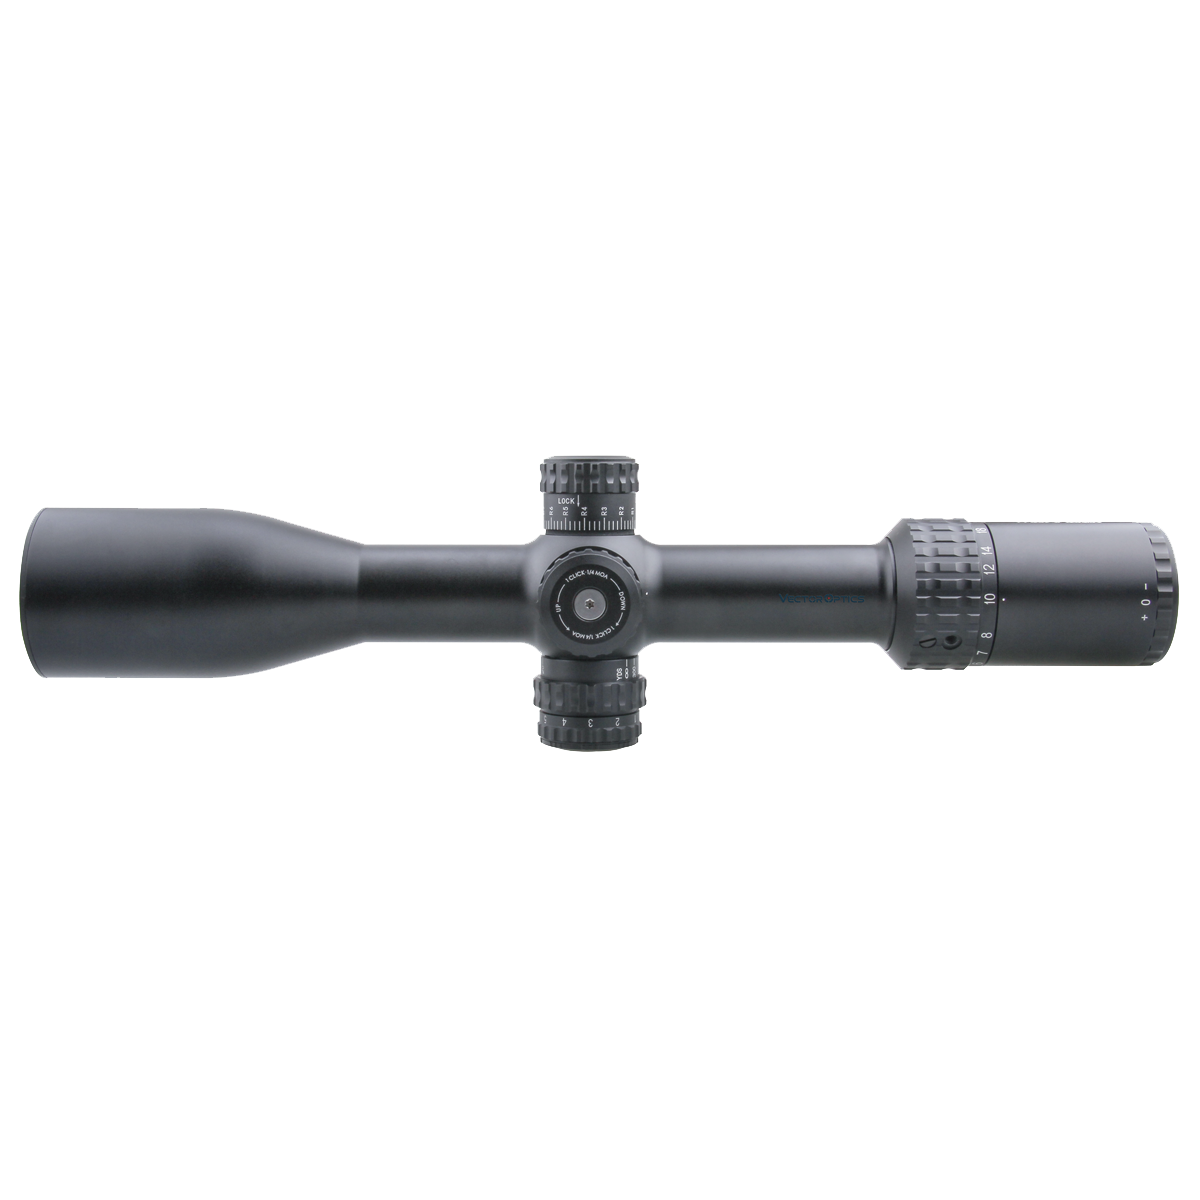 Aston 3-18x44SFP Riflescope